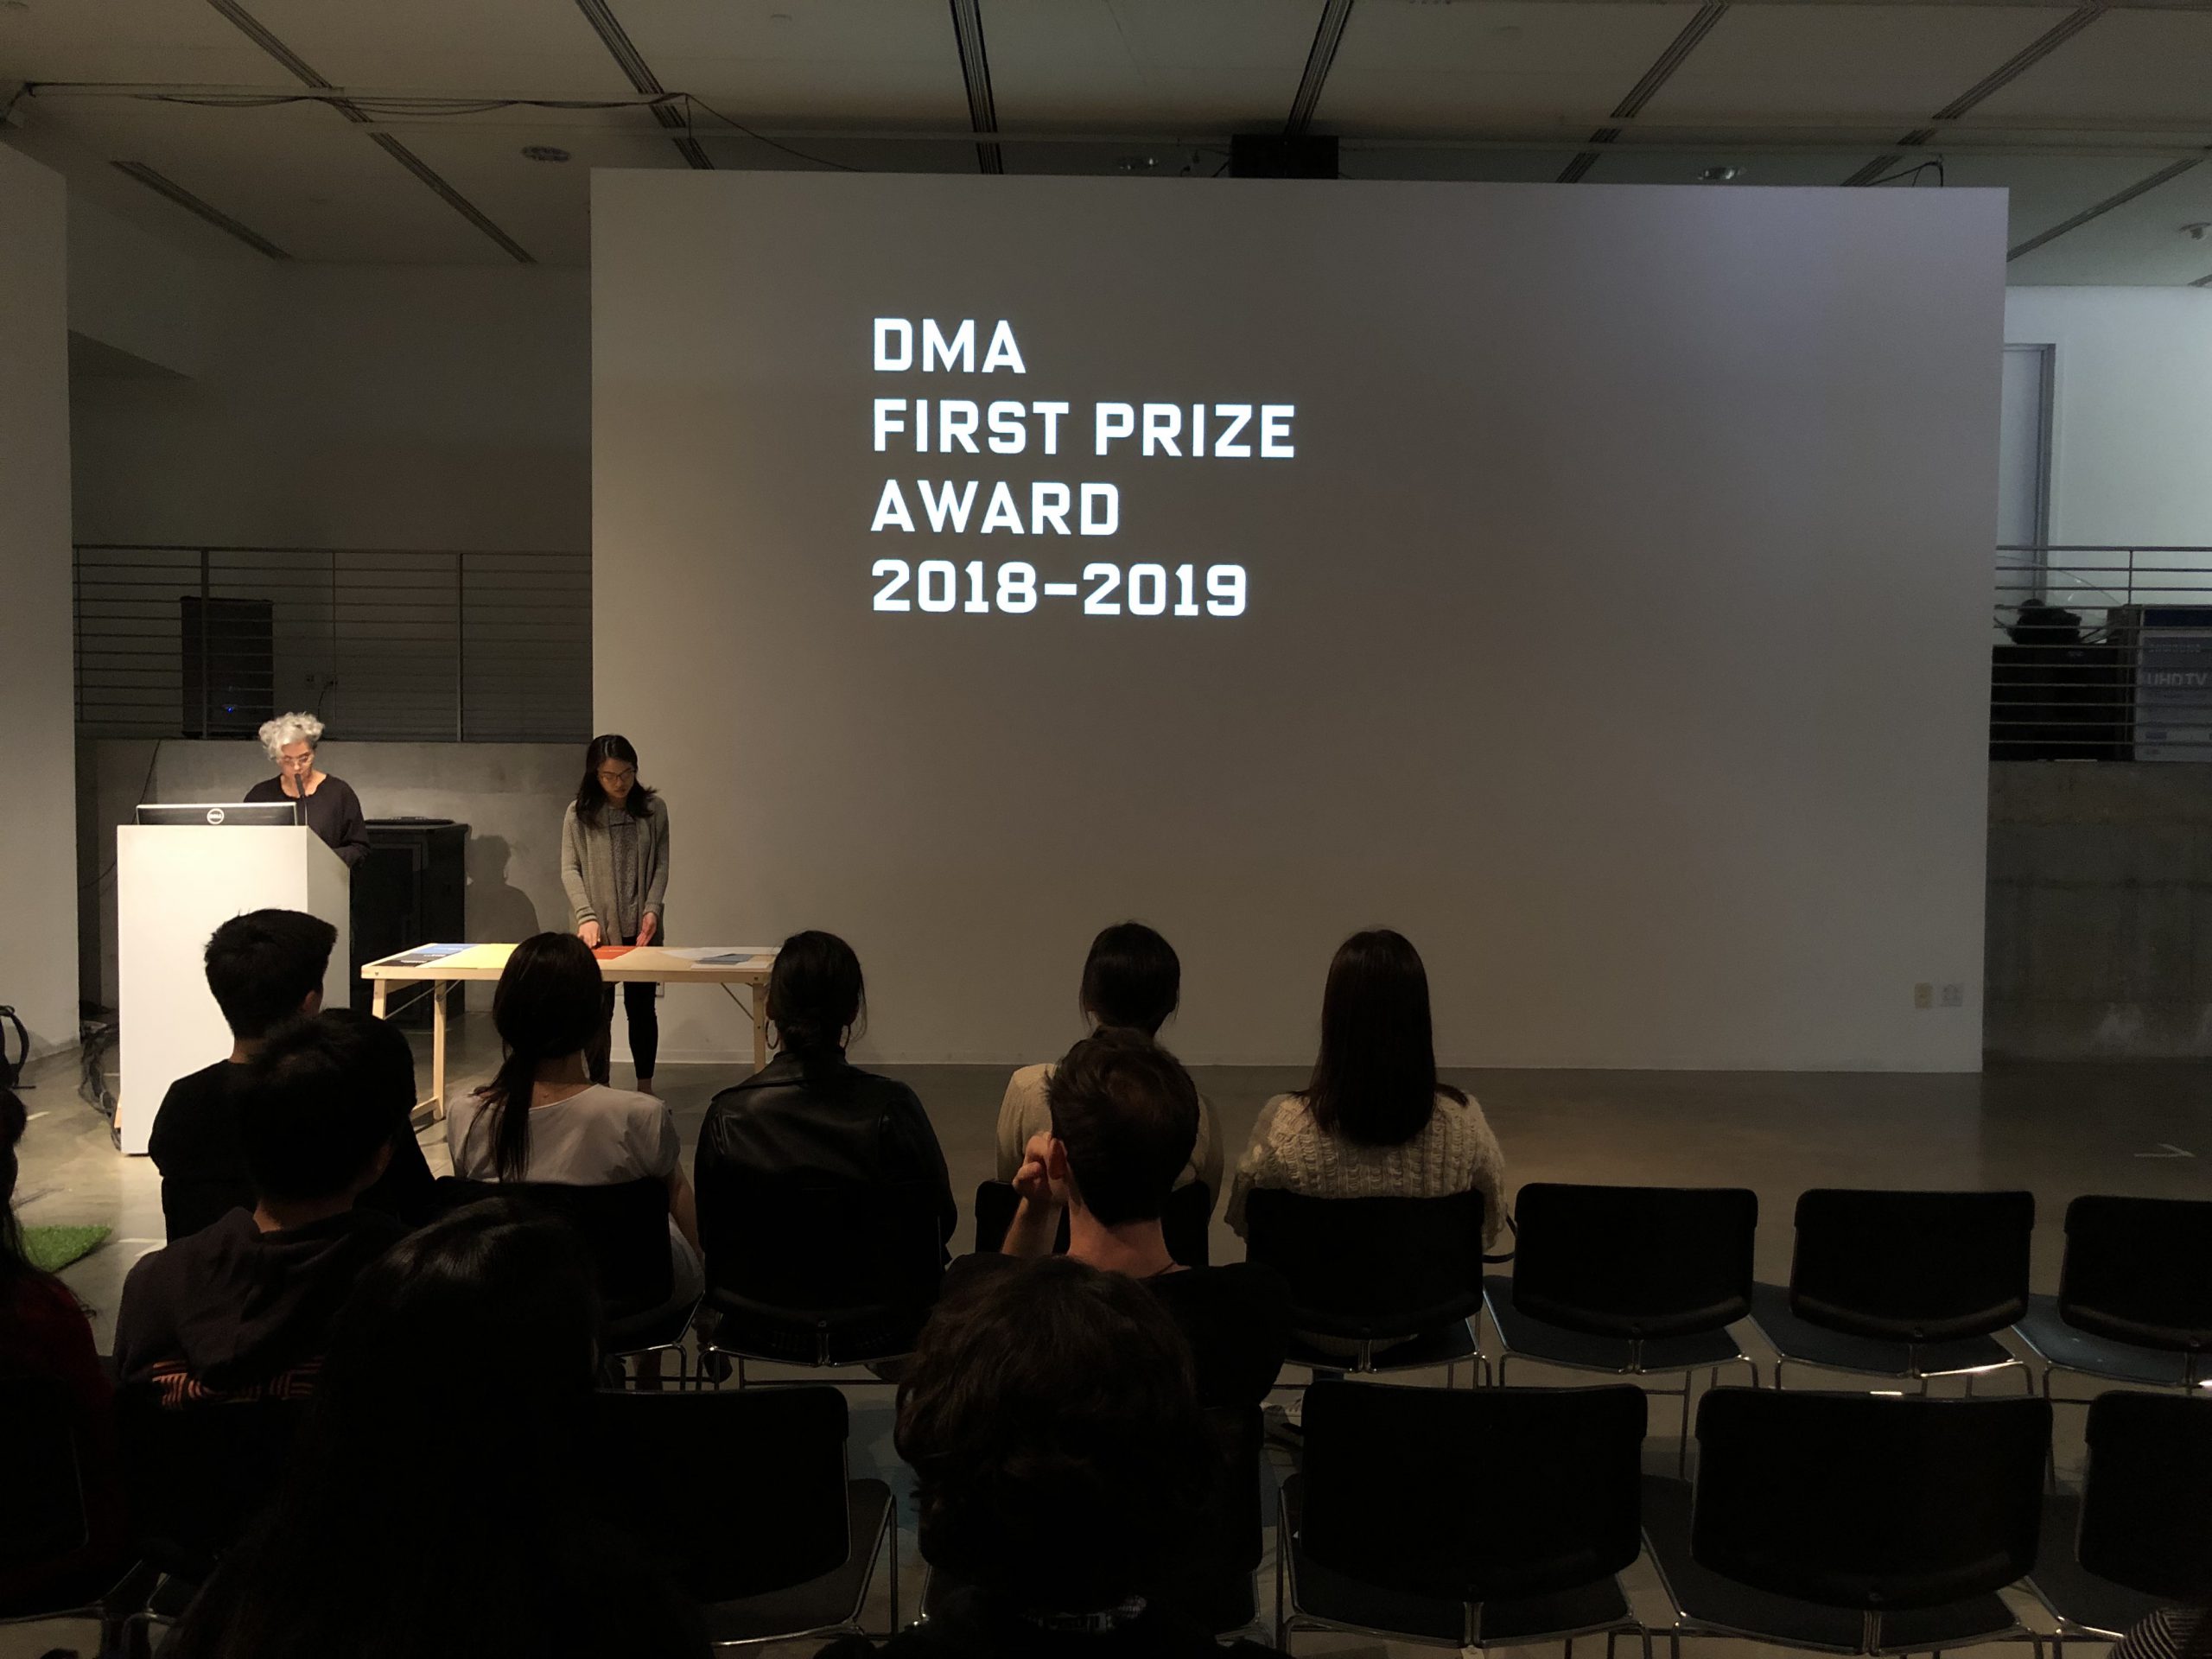 DMA Scholarship Reception 2019-2020, DMA First Prize Award 2018-2019